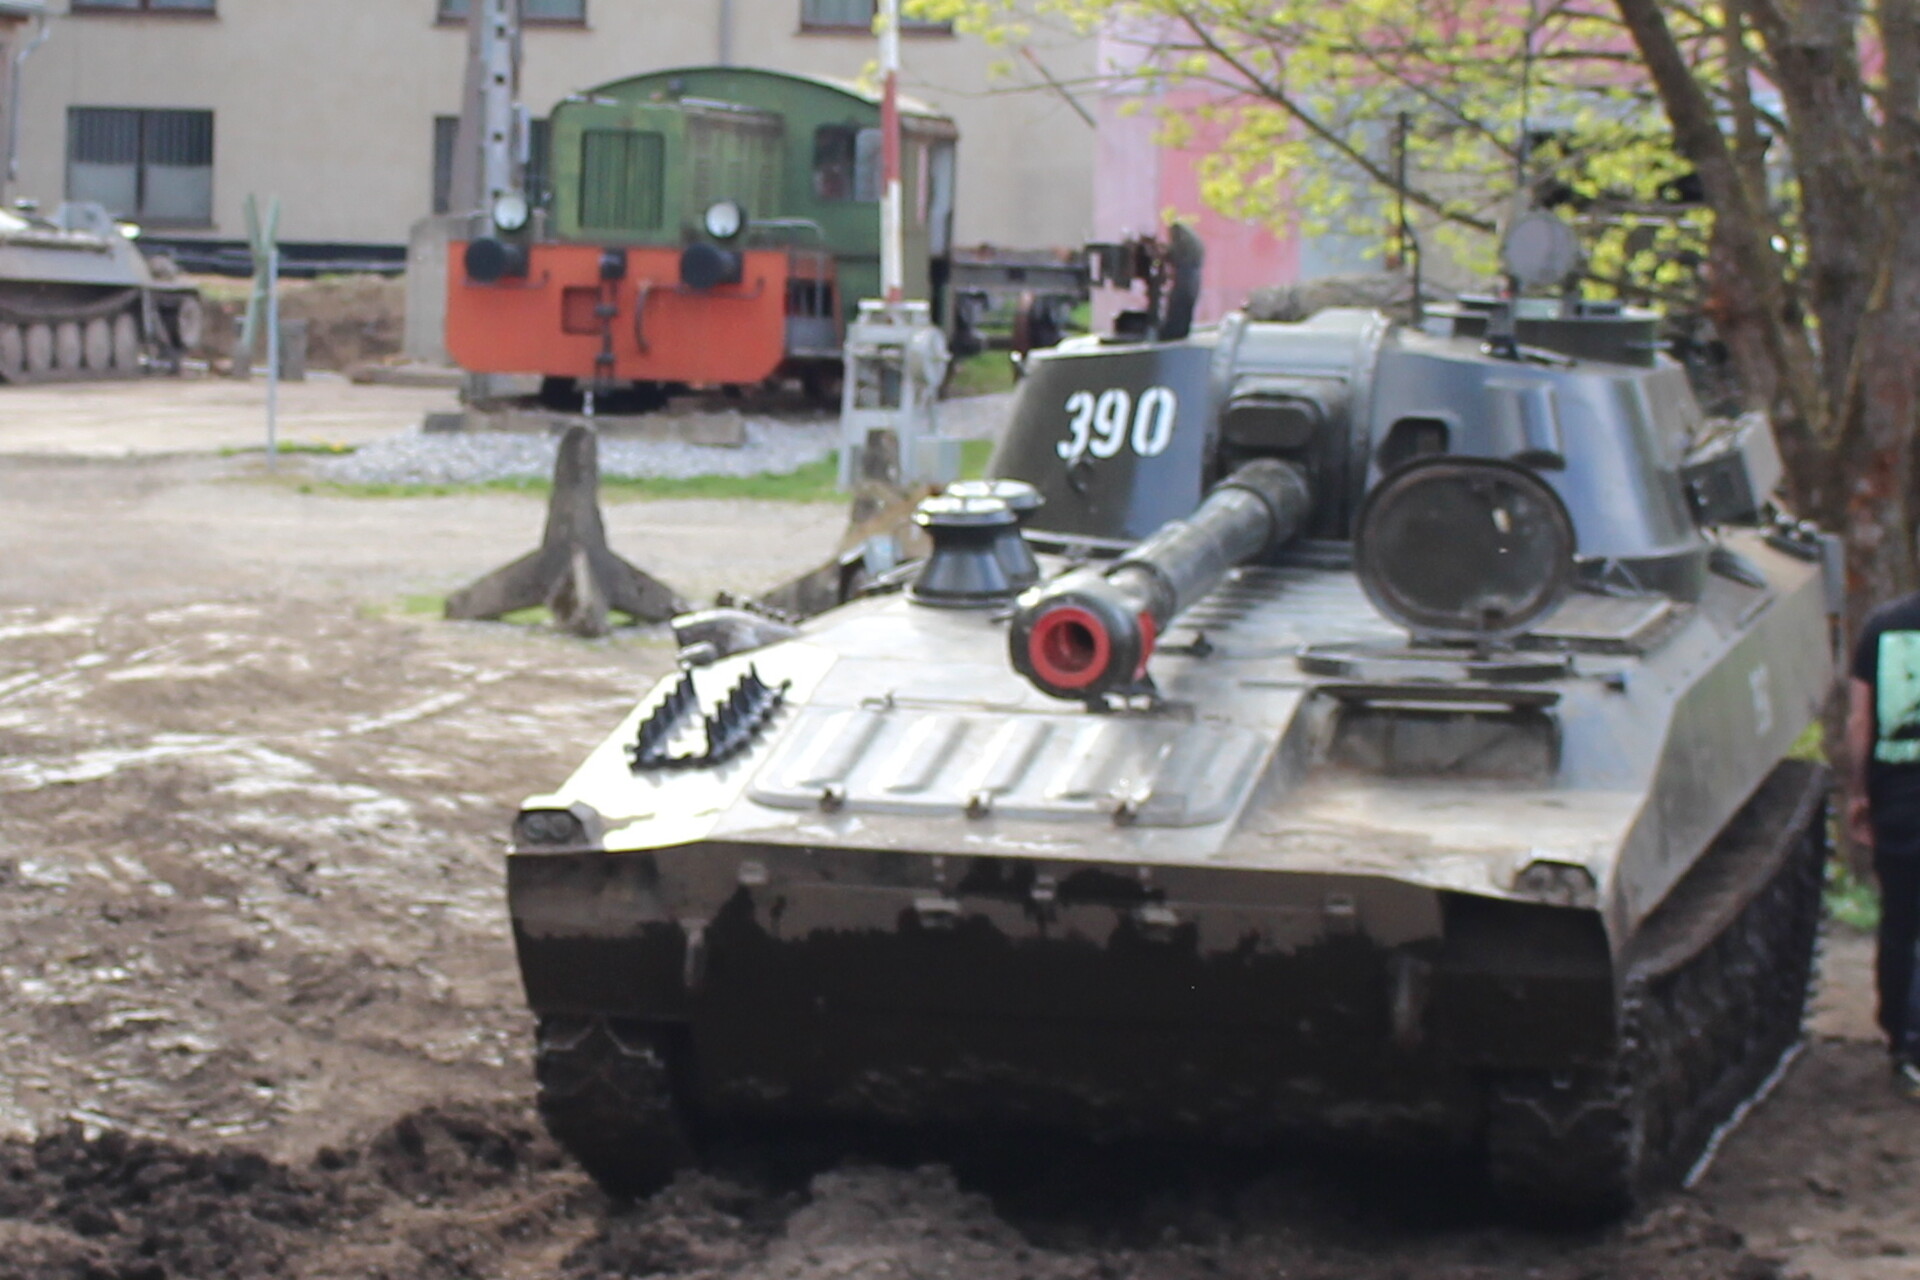 2S1-Panzerhaubitze-122 mm fahren